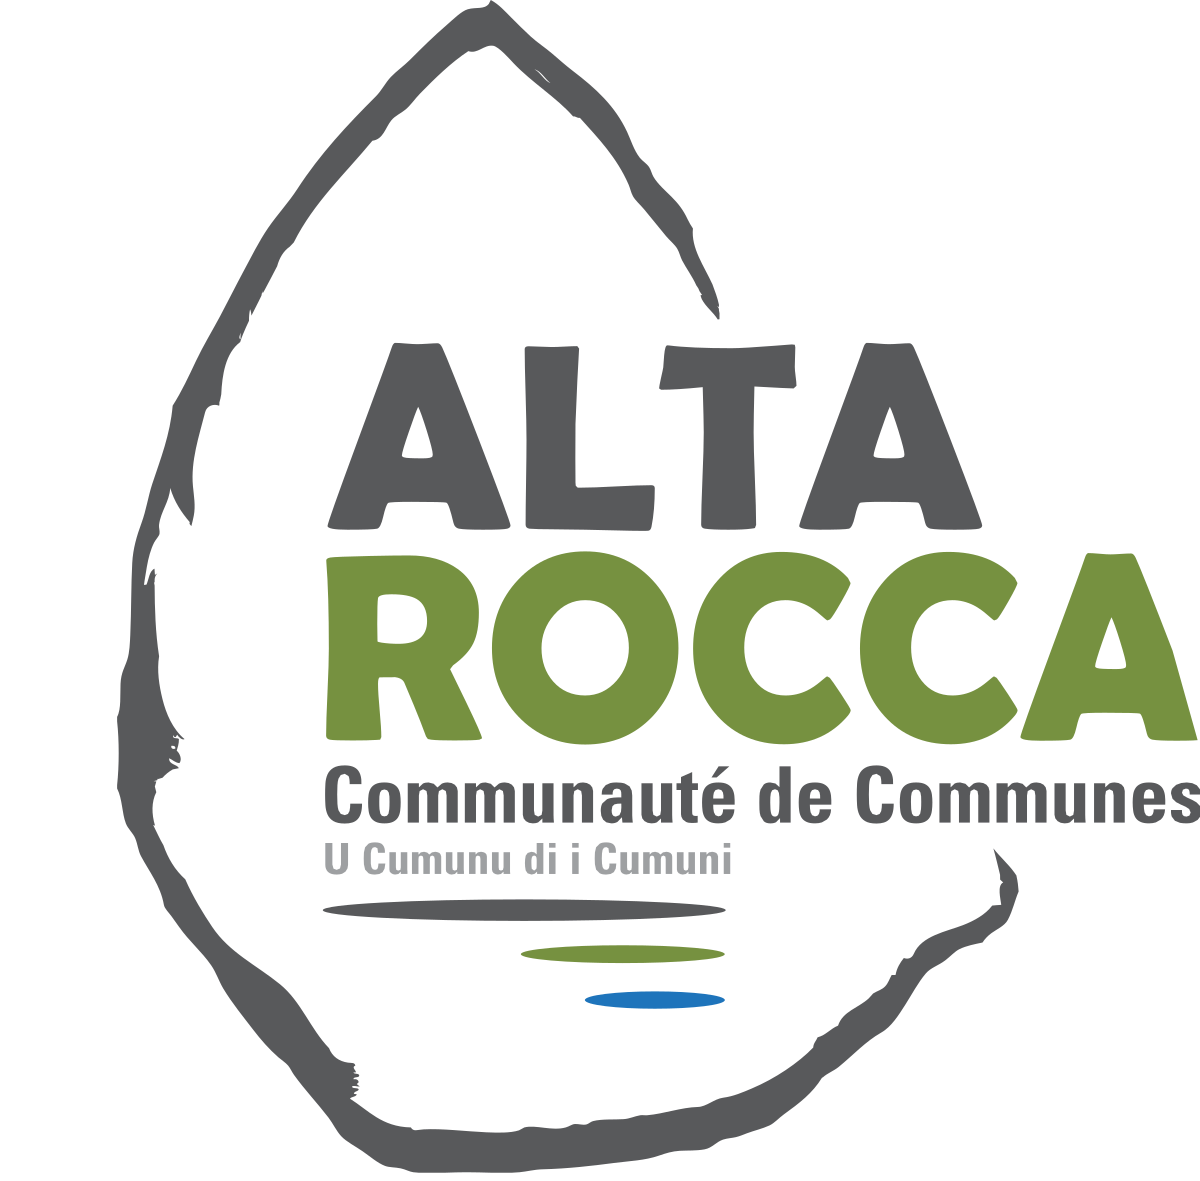 Communauté de Communes Alta Rocca